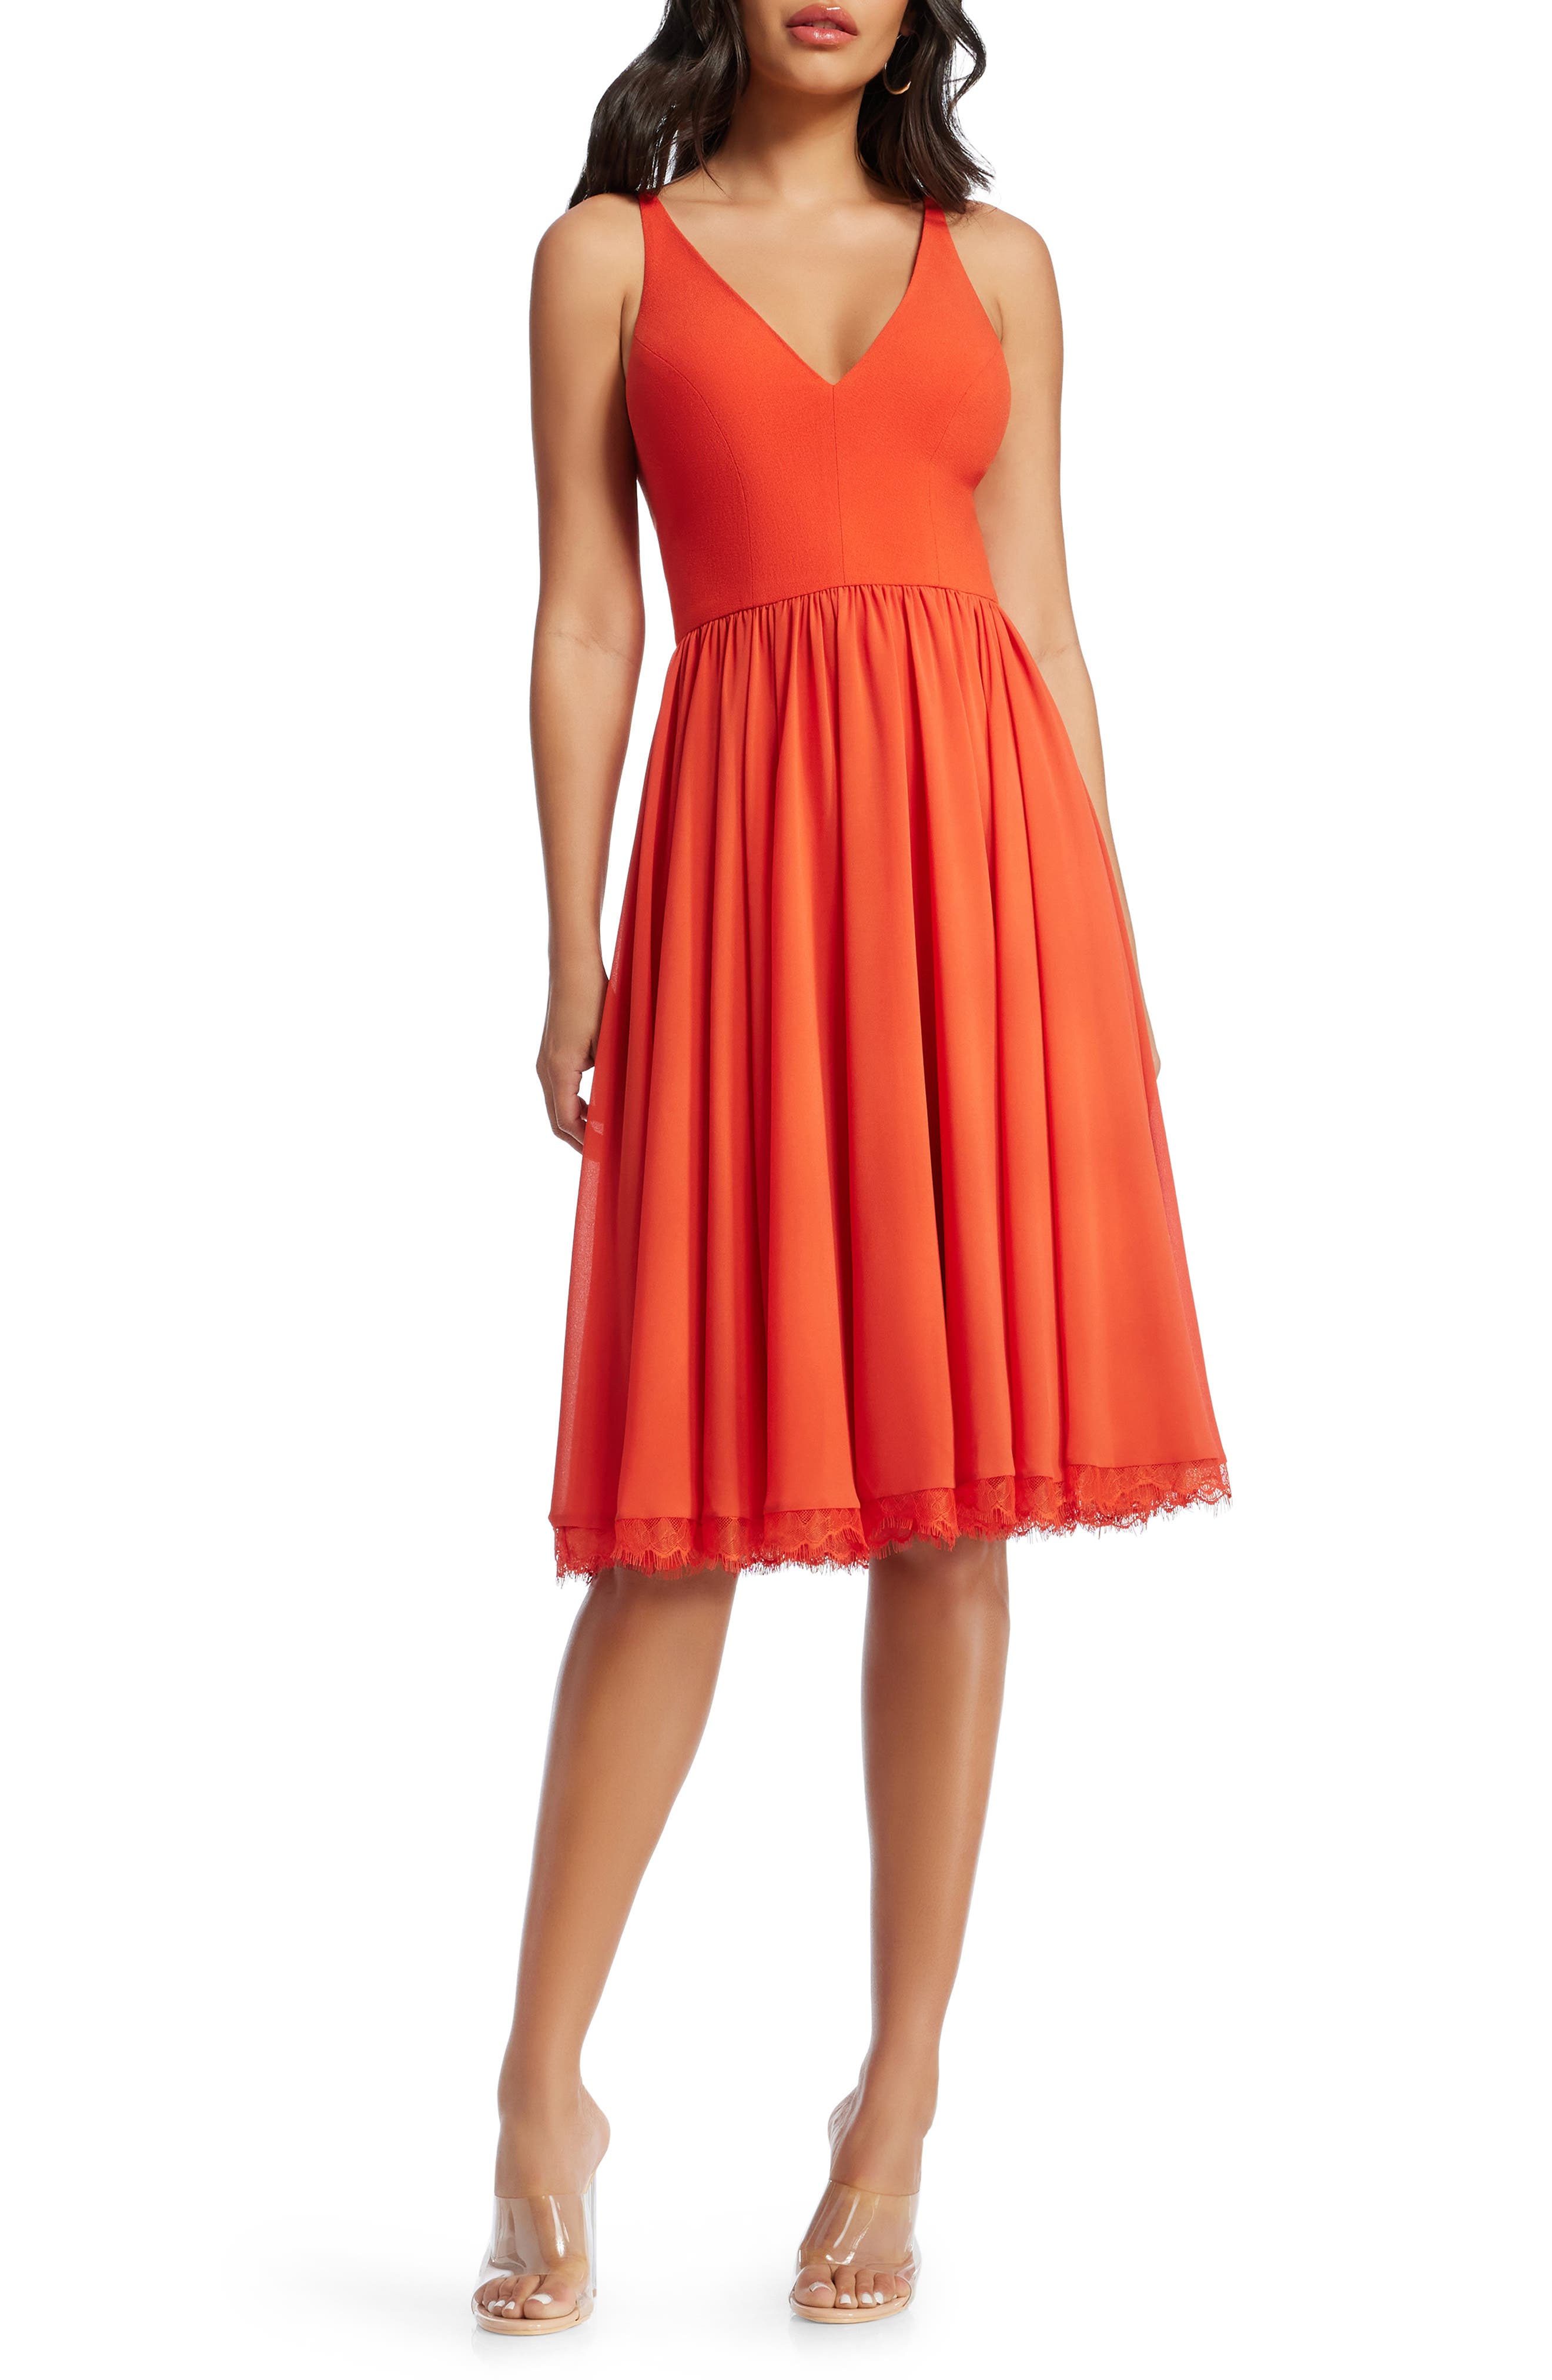 orange cocktail dresses